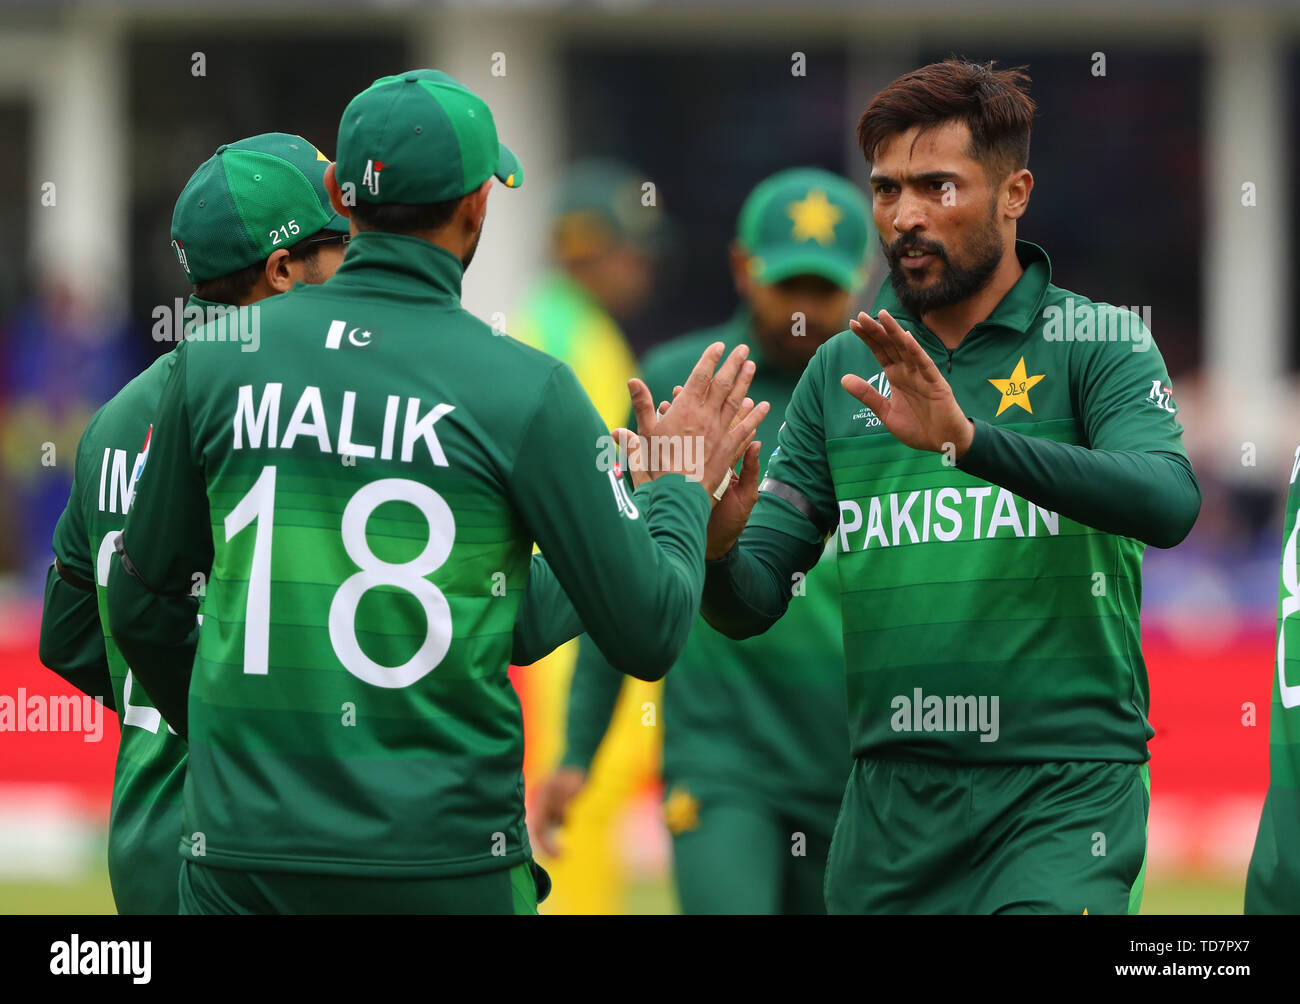 Taunton, UK. 12th June, 2019. Mohammad Amir of Pakistan celebrates taking the wicket of Shaun Marsh during the Australia v Pakistan, ICC Cricket World Cup match